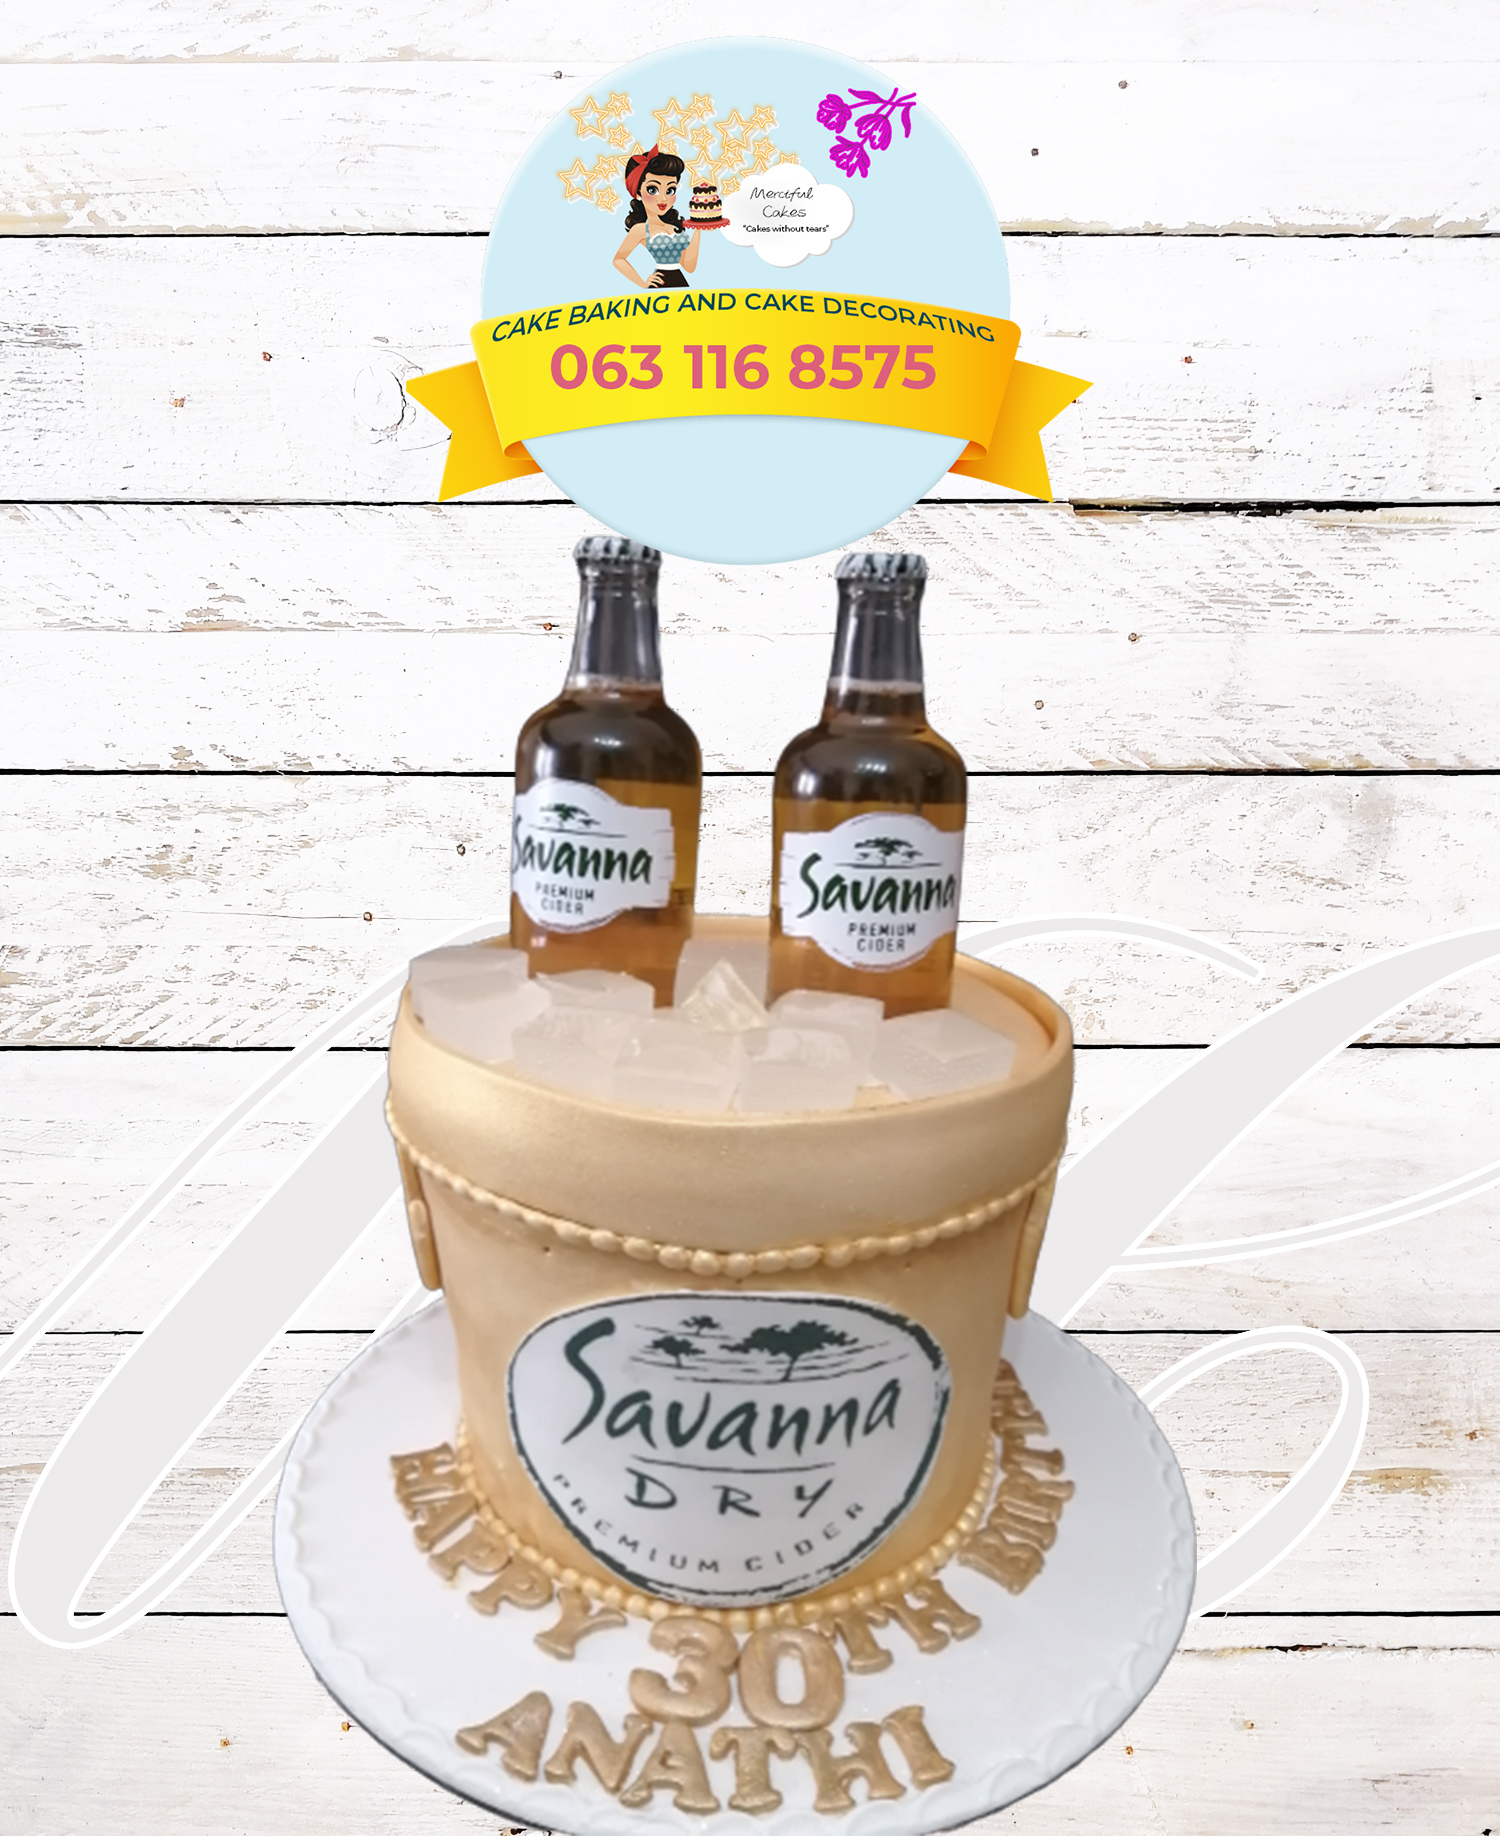 Nothing Bundt Cakes - Savannah | Visit Savannah